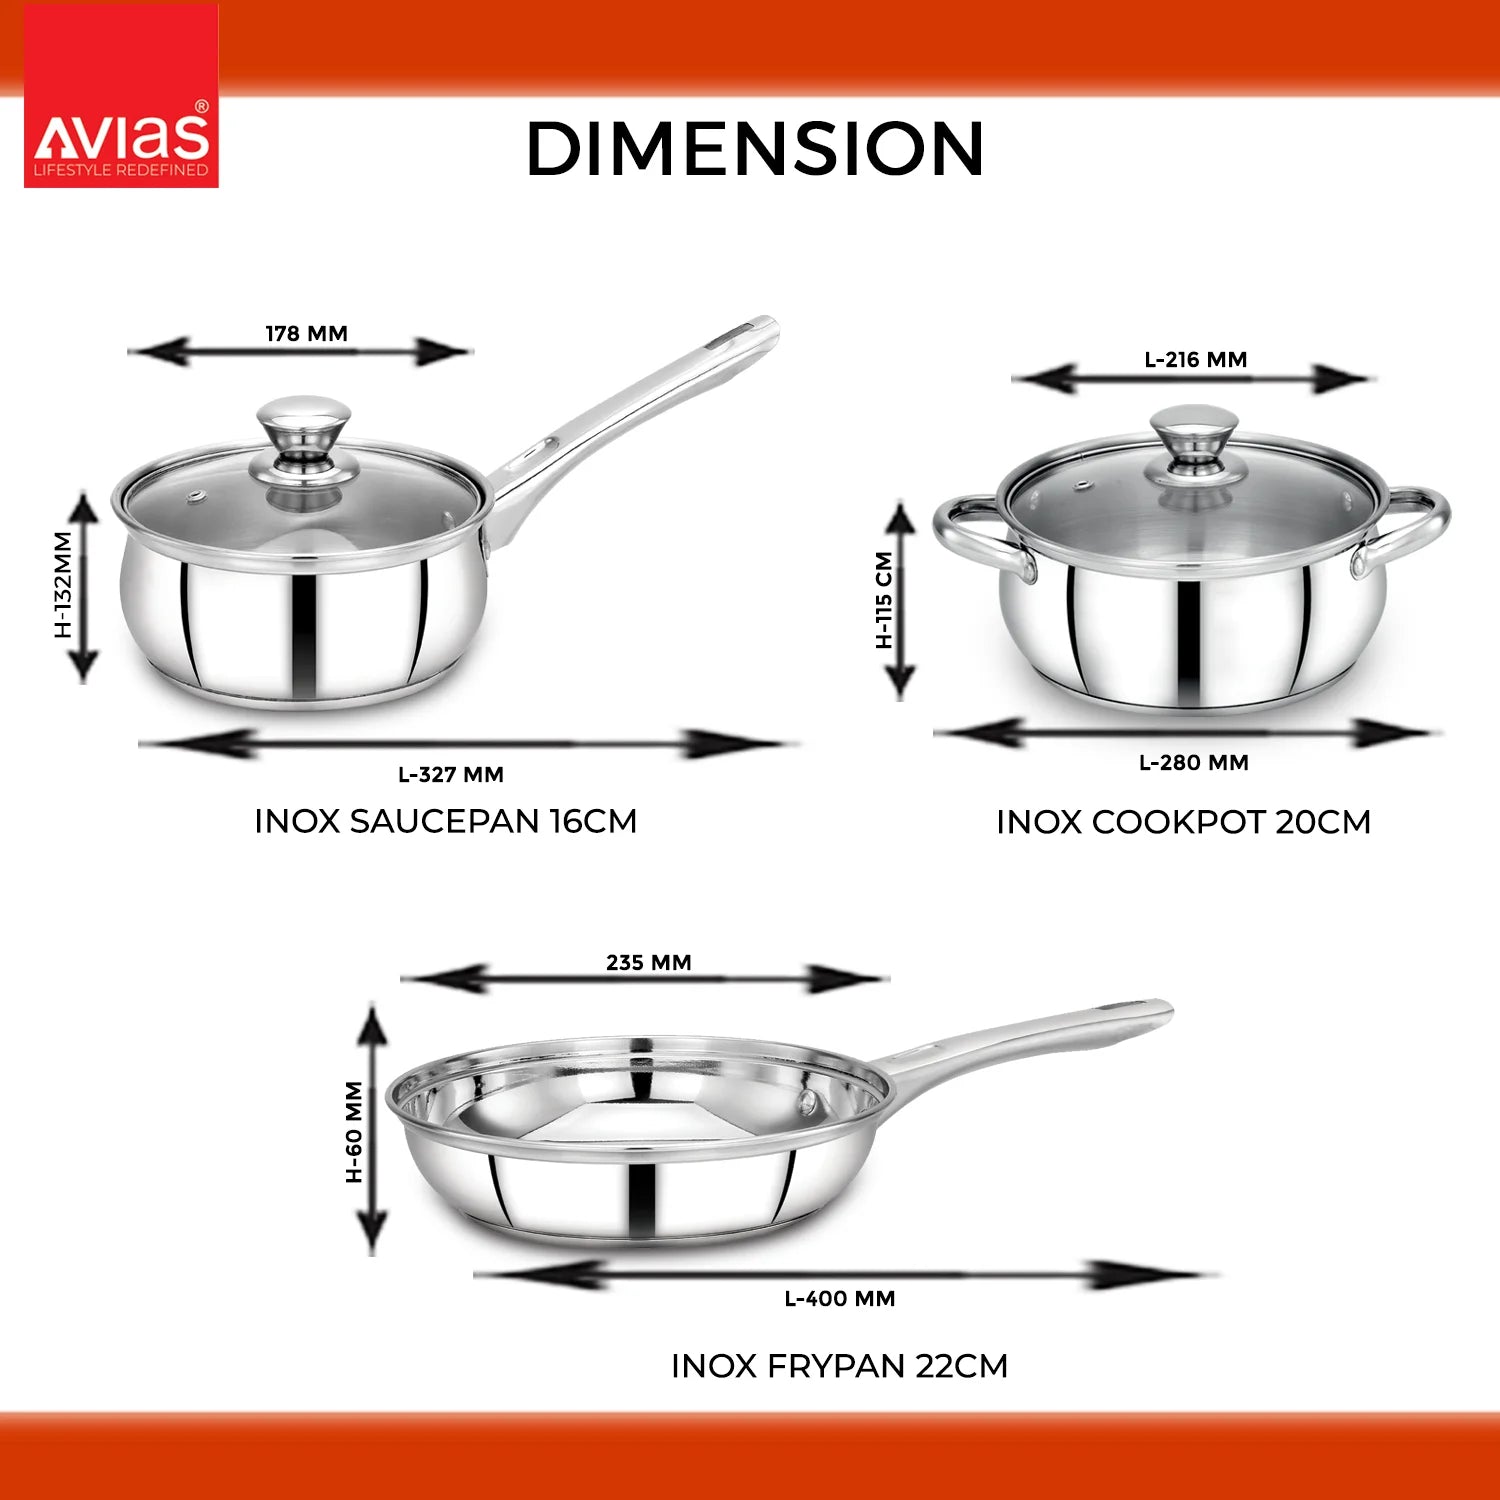 Avias Stainless Steel kitchenware/ cookware 7 PCS Kitchen set  dimension